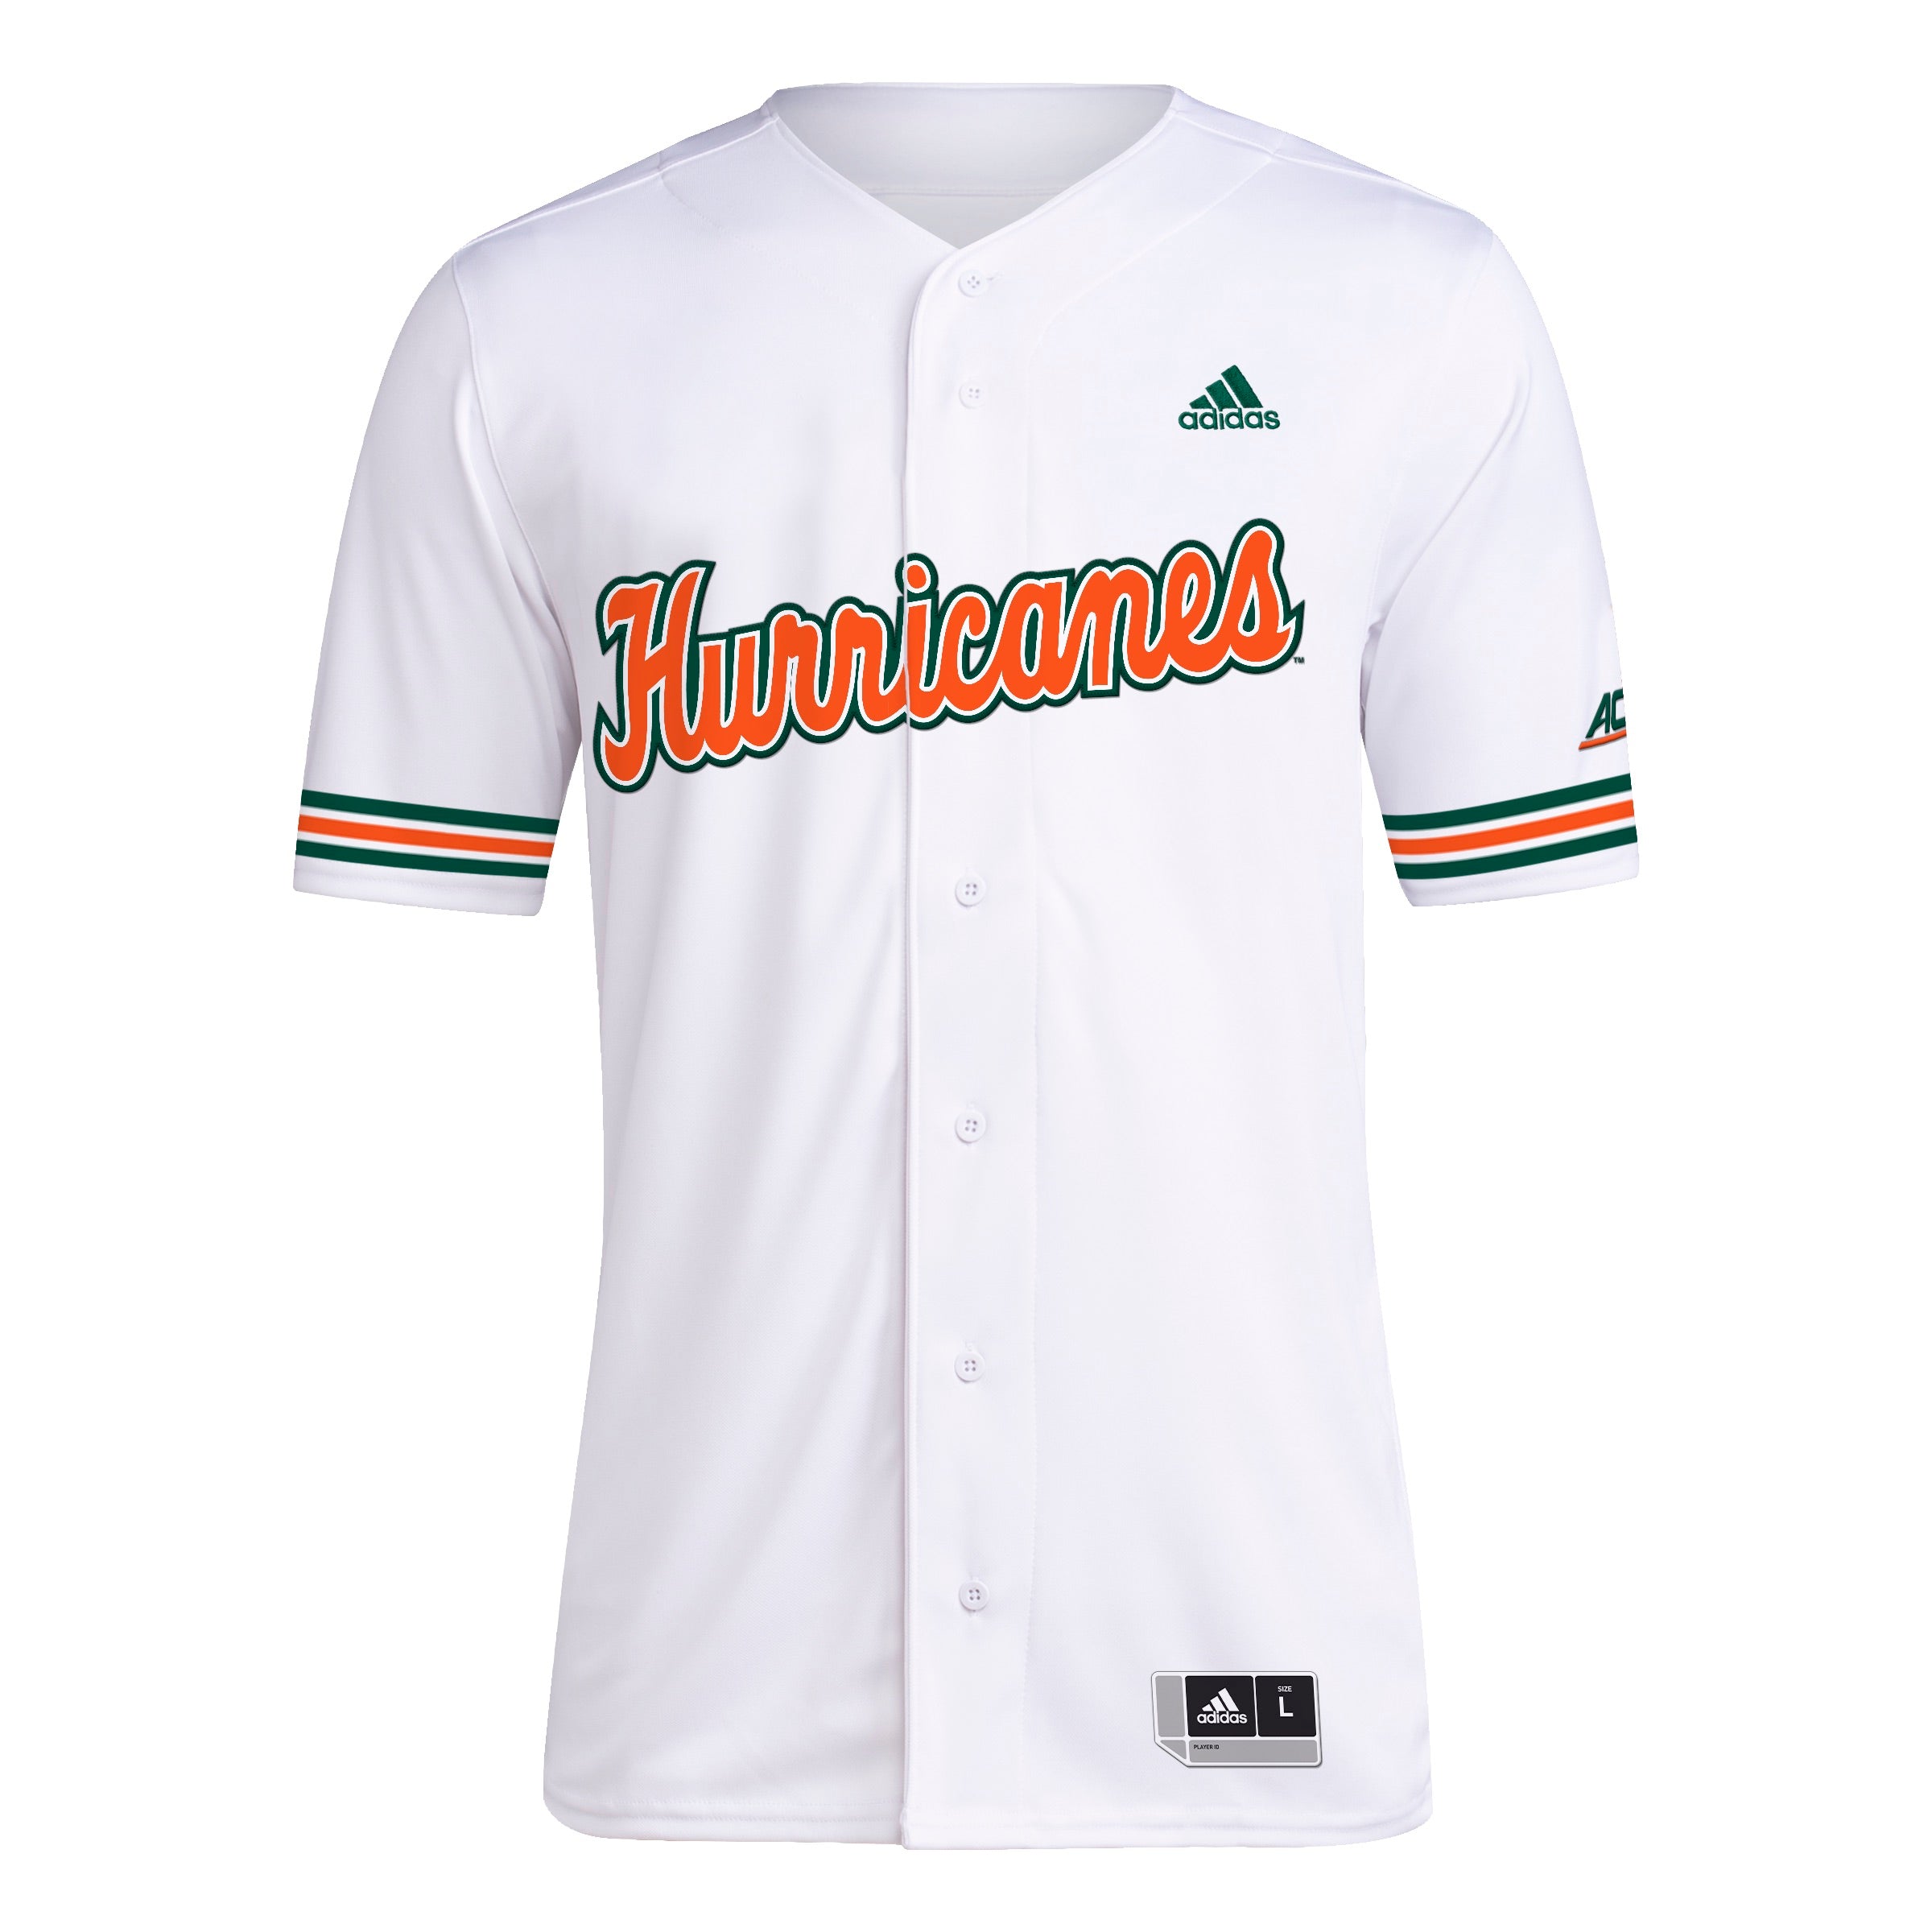 Miami Hurricanes adidas Baseball Jersey - White